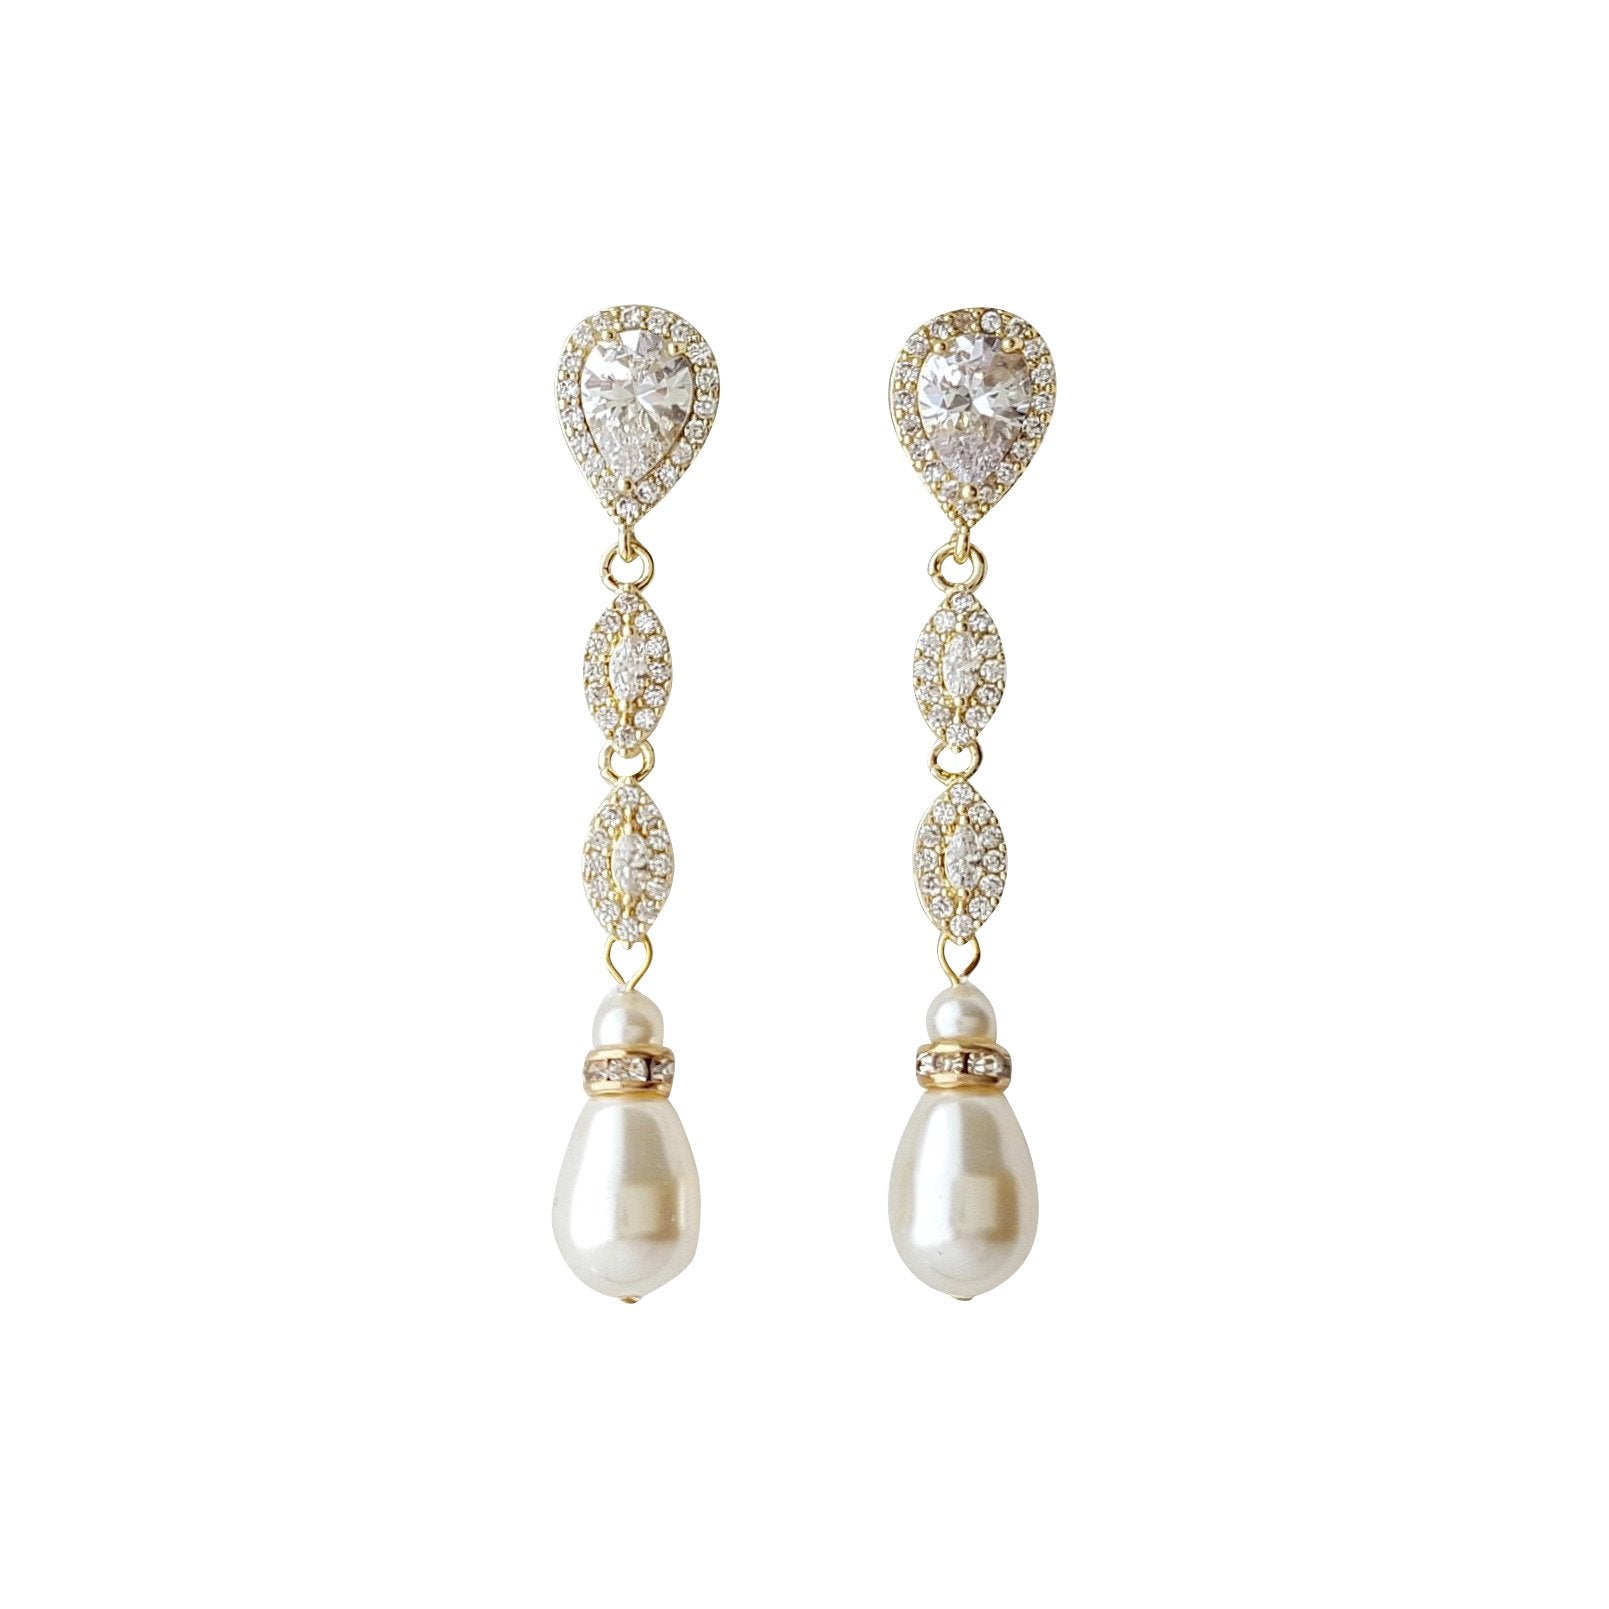 Slim Long Silver Pearl Earrings-Abby